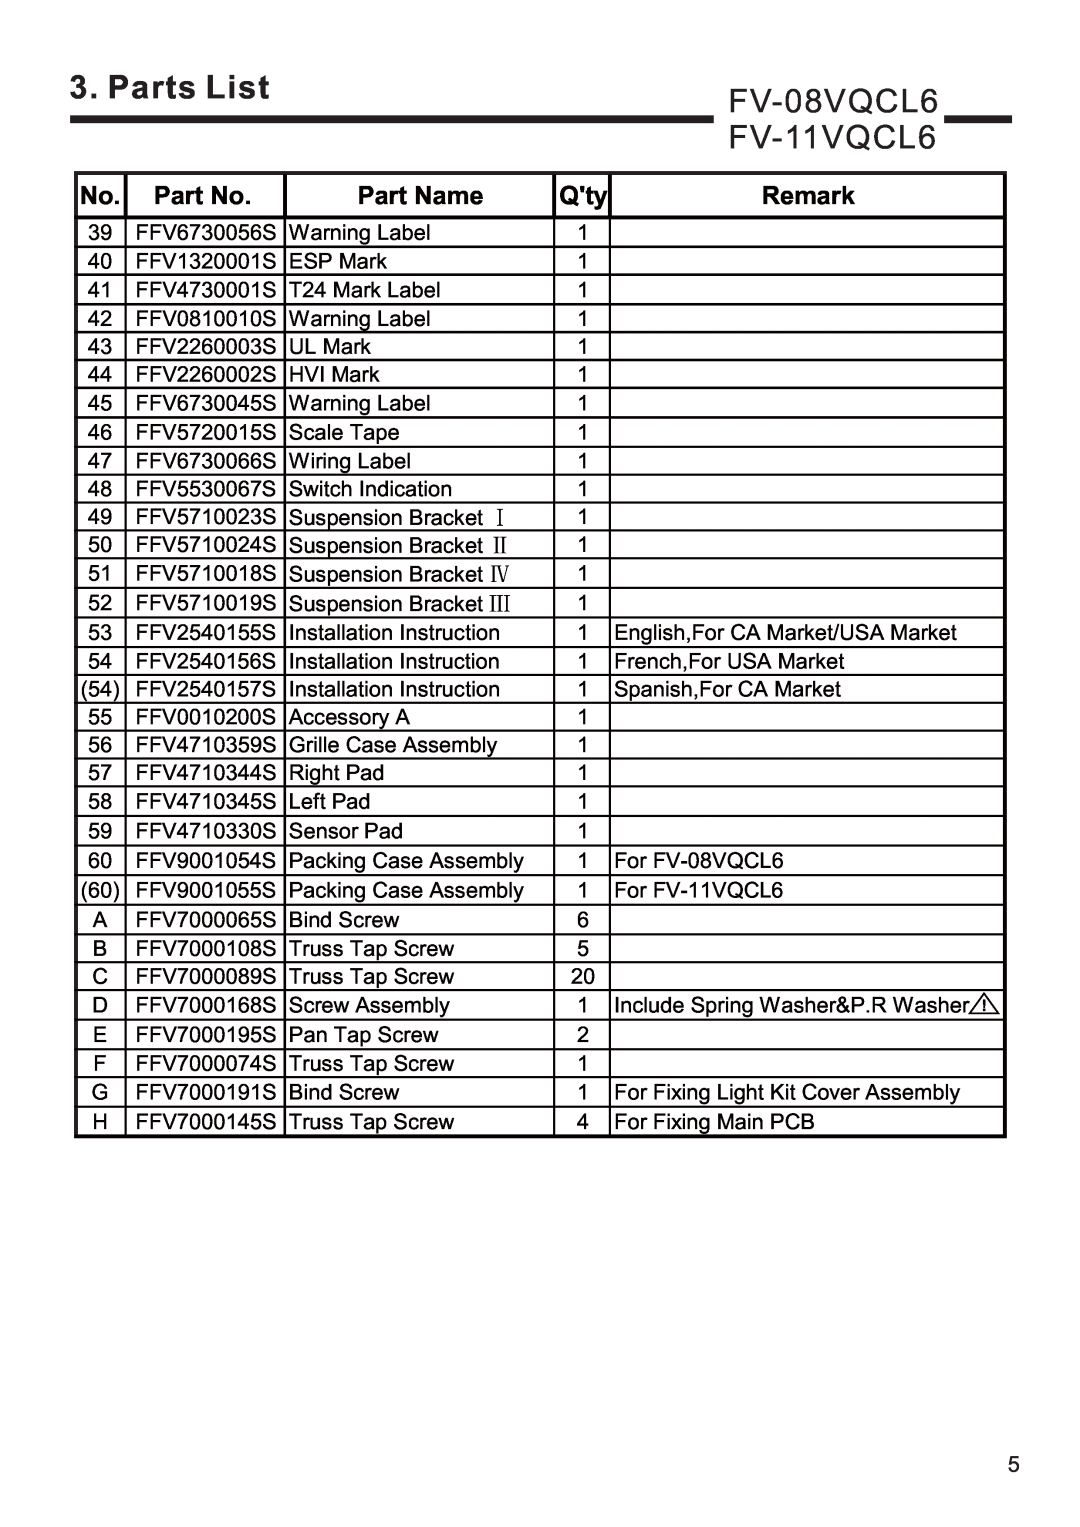 Panasonic FV-11VQCL6 service manual Parts List, FV-08VQCL6, Part Name, Remark 